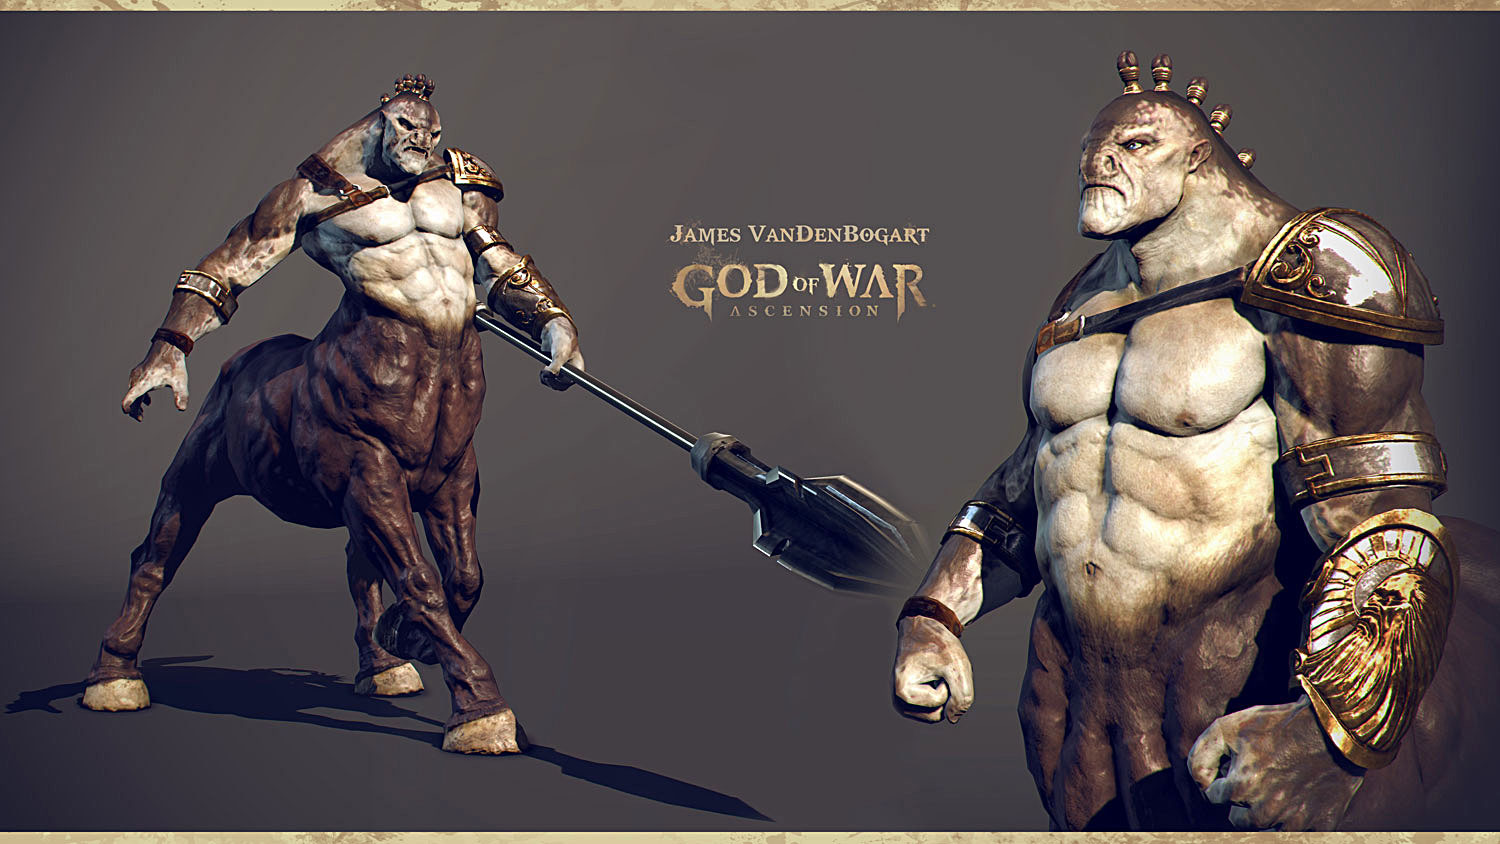 god of war ascension wikipedia